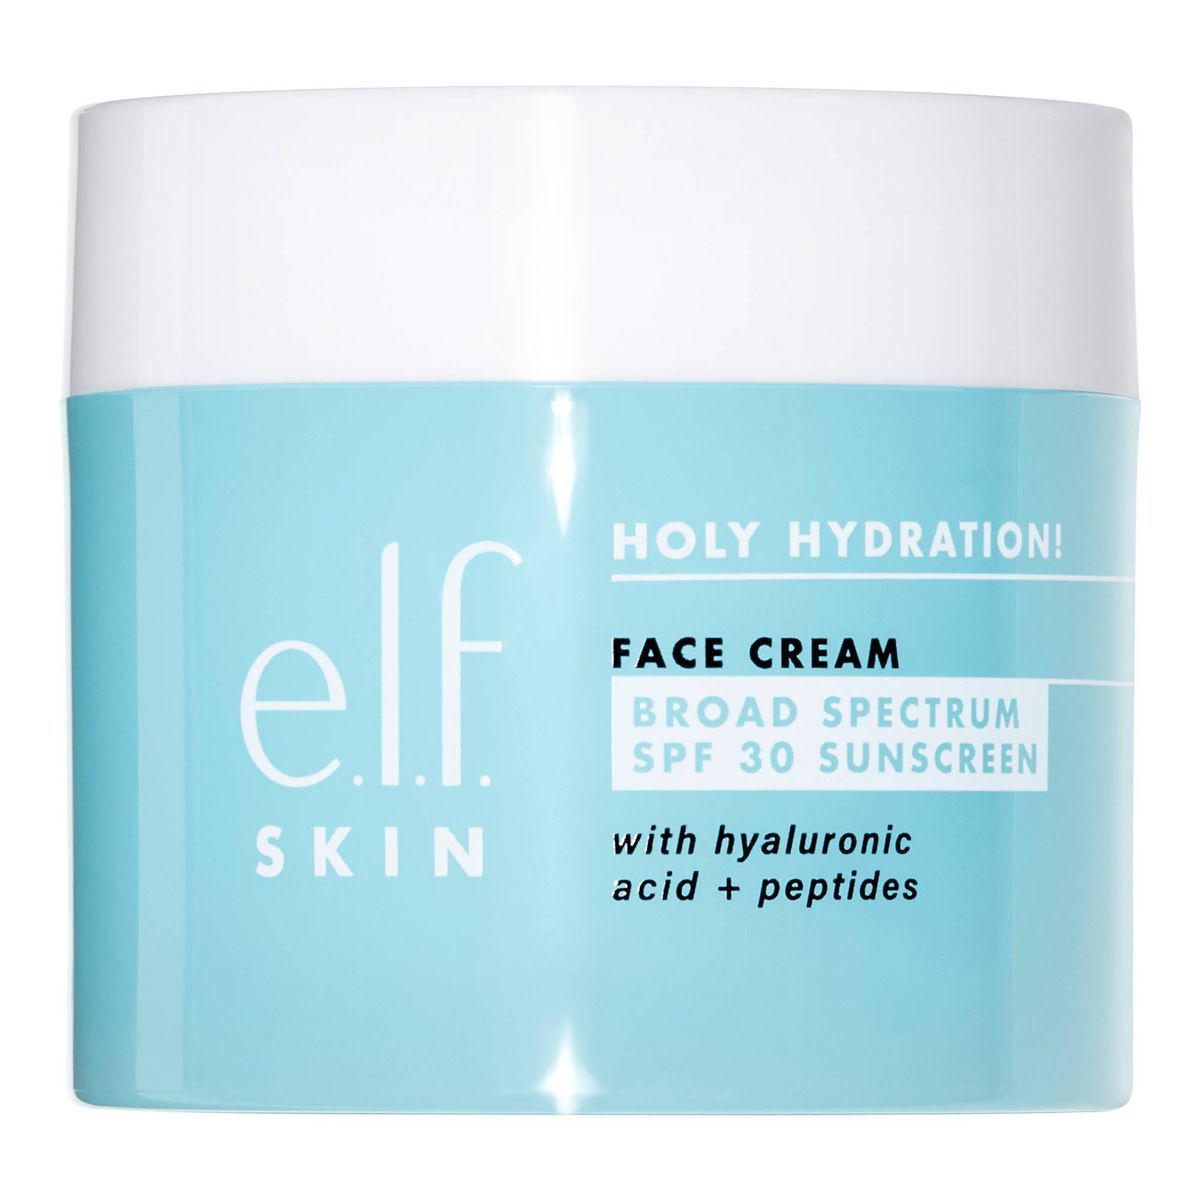 e.l.f. Holy Hydration! Broad Spectrum Sunscreen Face Cream SPF 30 - 1.76oz | Target